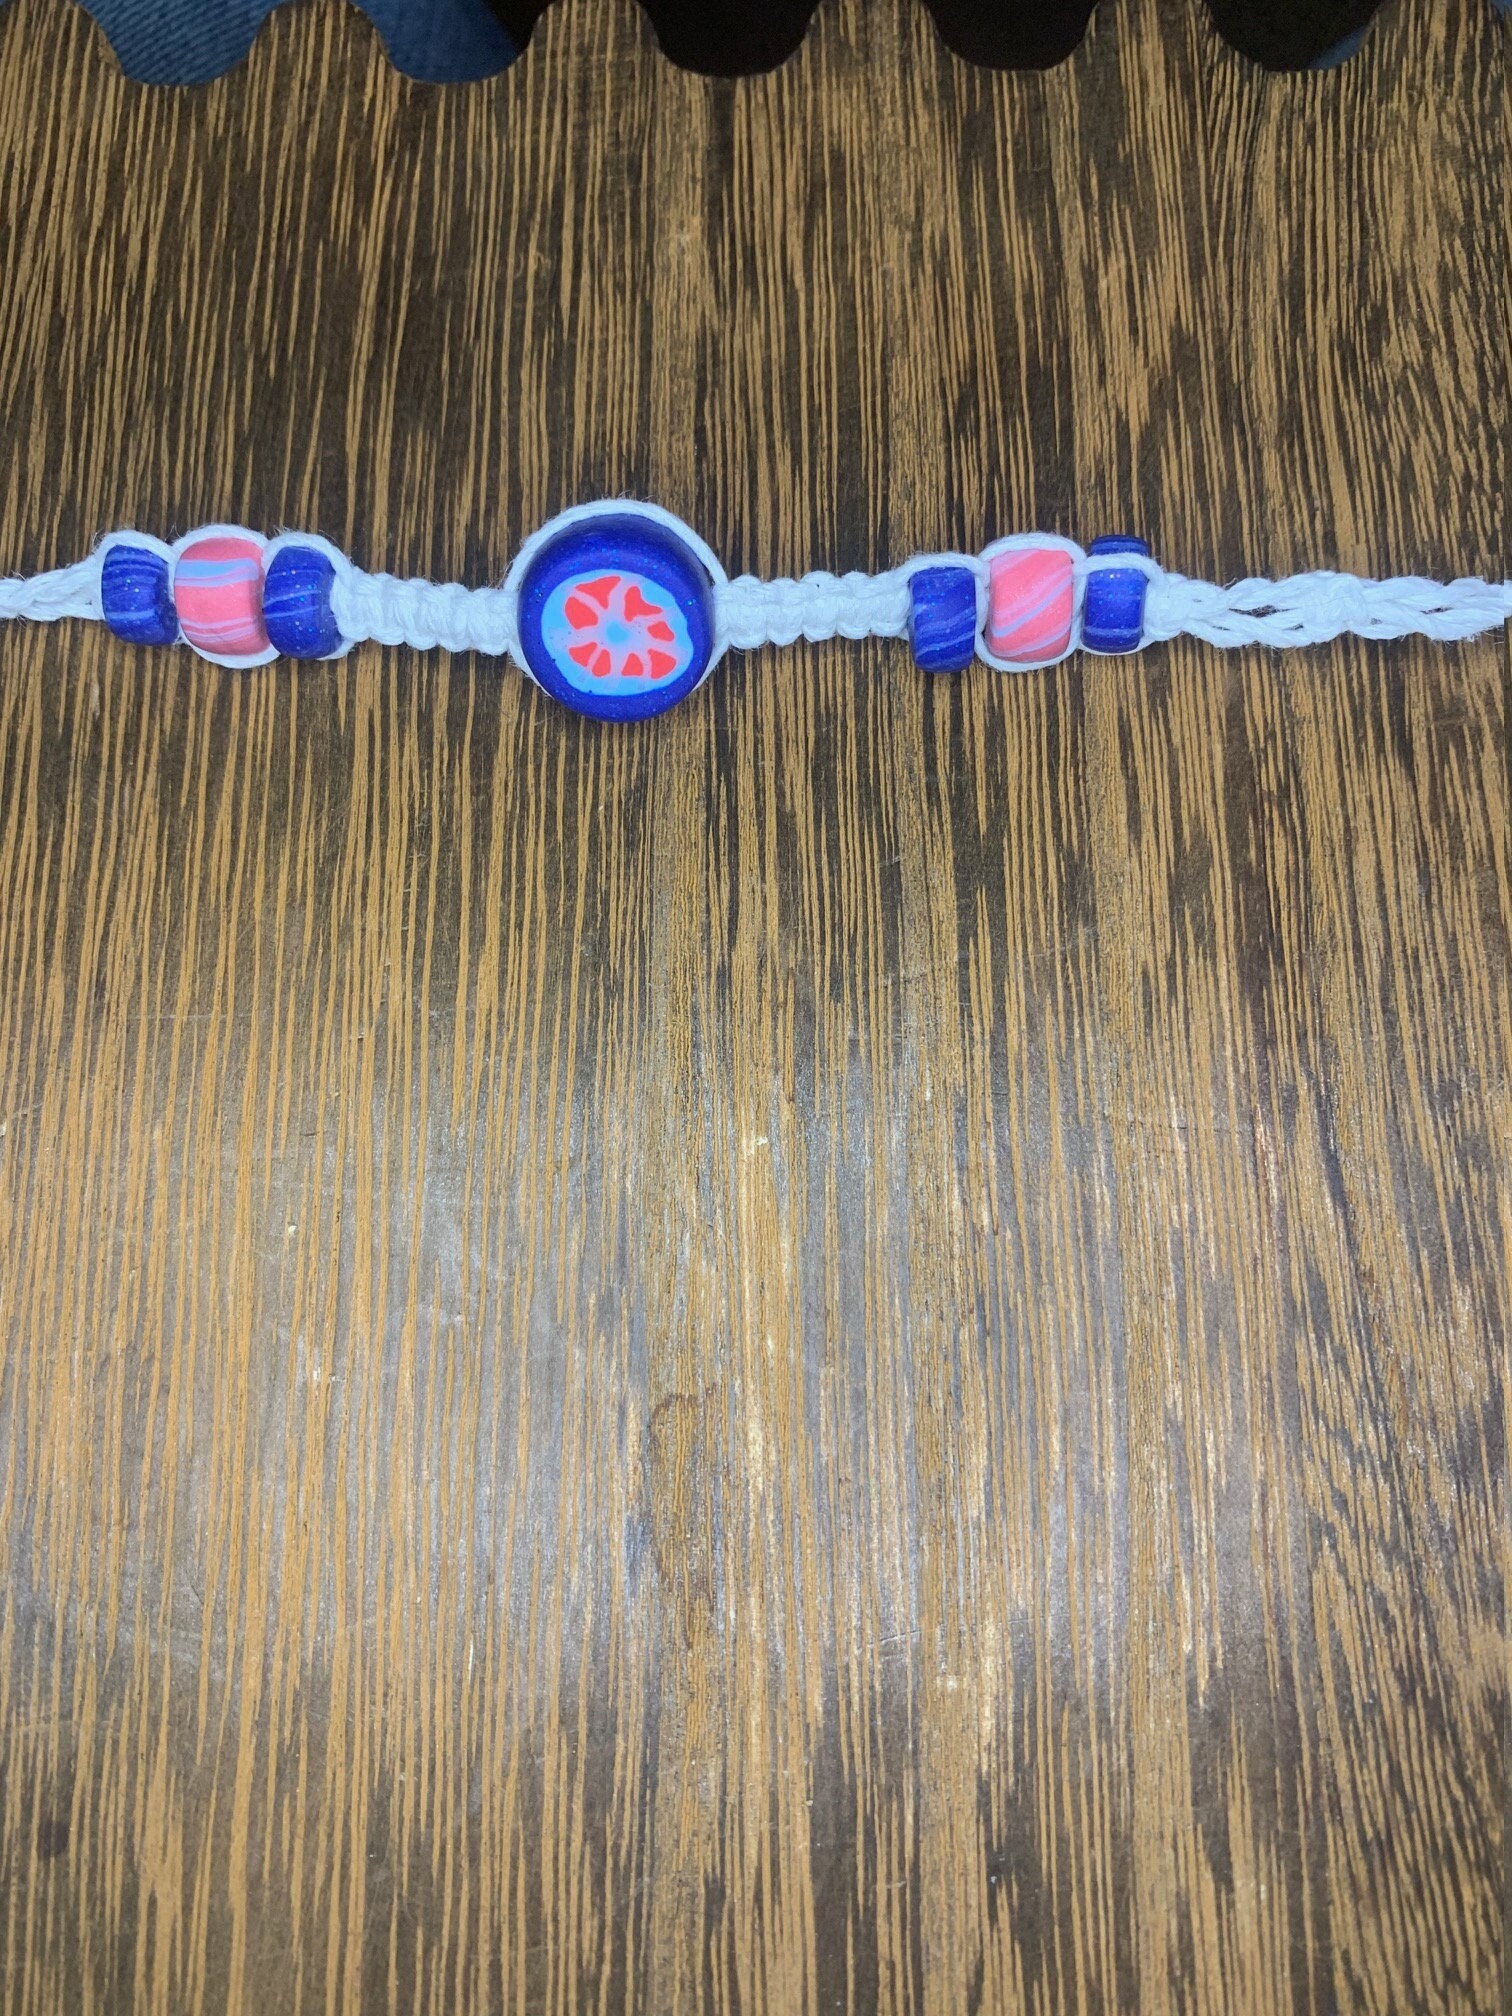 Handmade Hemp Necklace with Polymer Clay Bead s